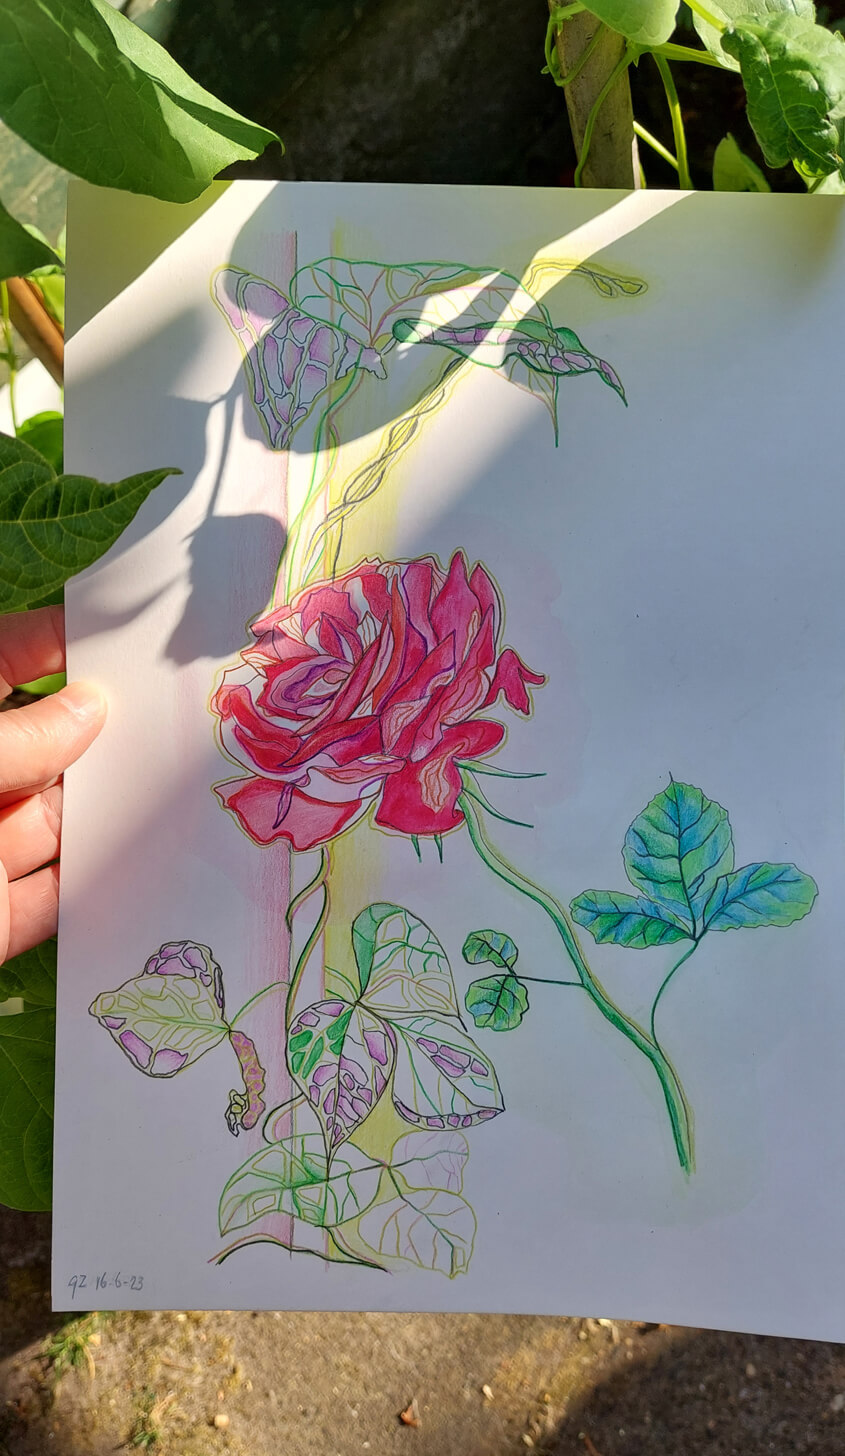 Roos and bean study En Plein Air Garden Gea Zwart June 2023 colored pencil drawing on A4 paper